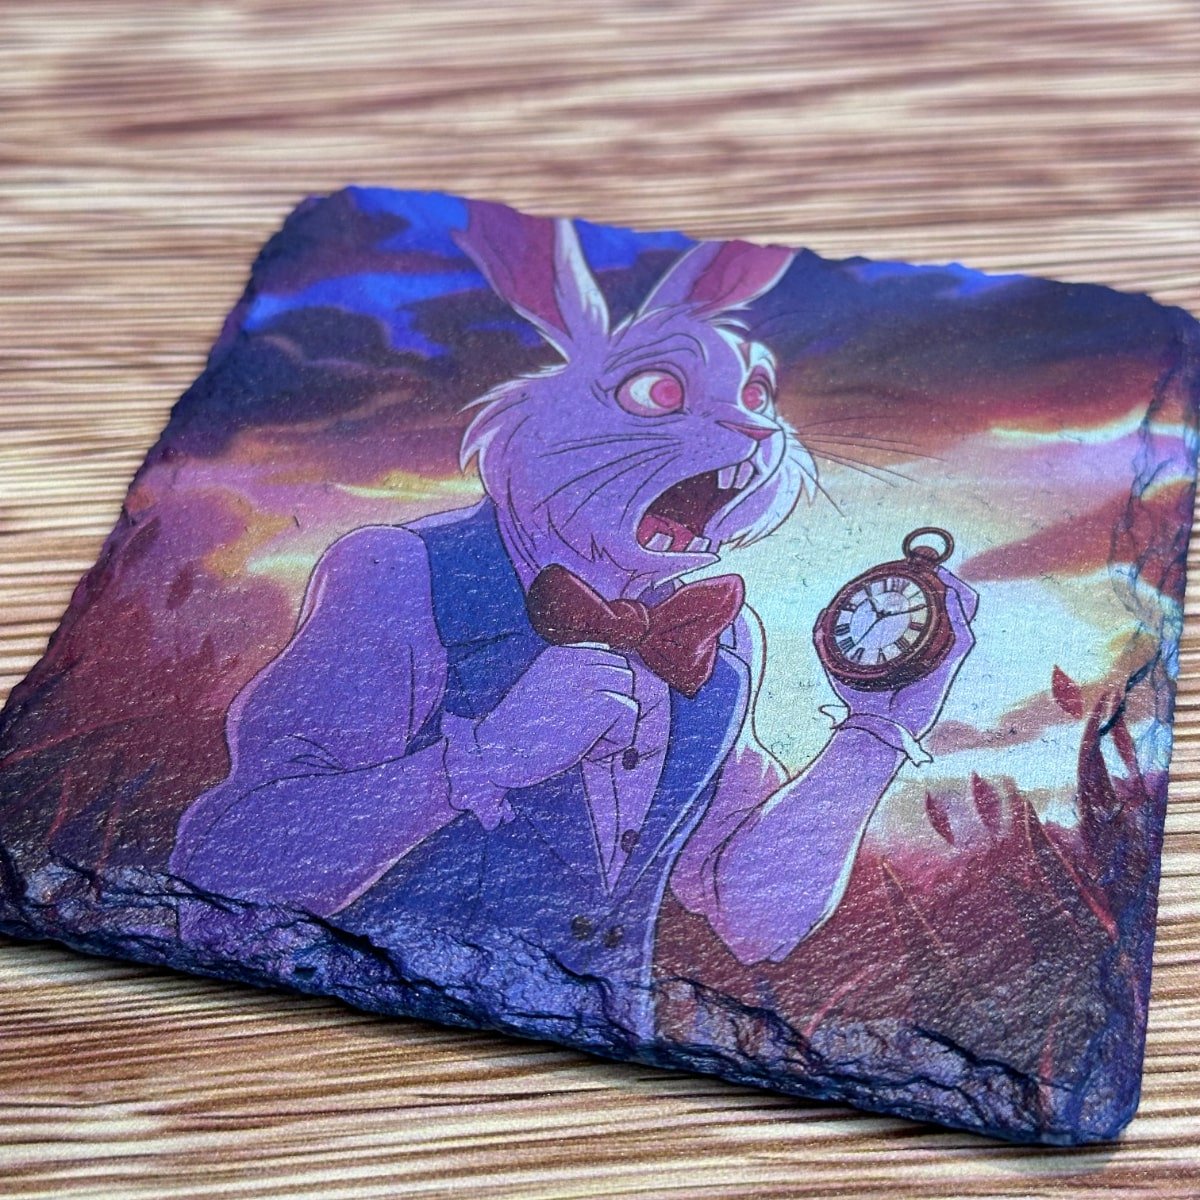 Alice in Wonderland Anime Style Slate Coaster - White Rabbit - GameOn.games